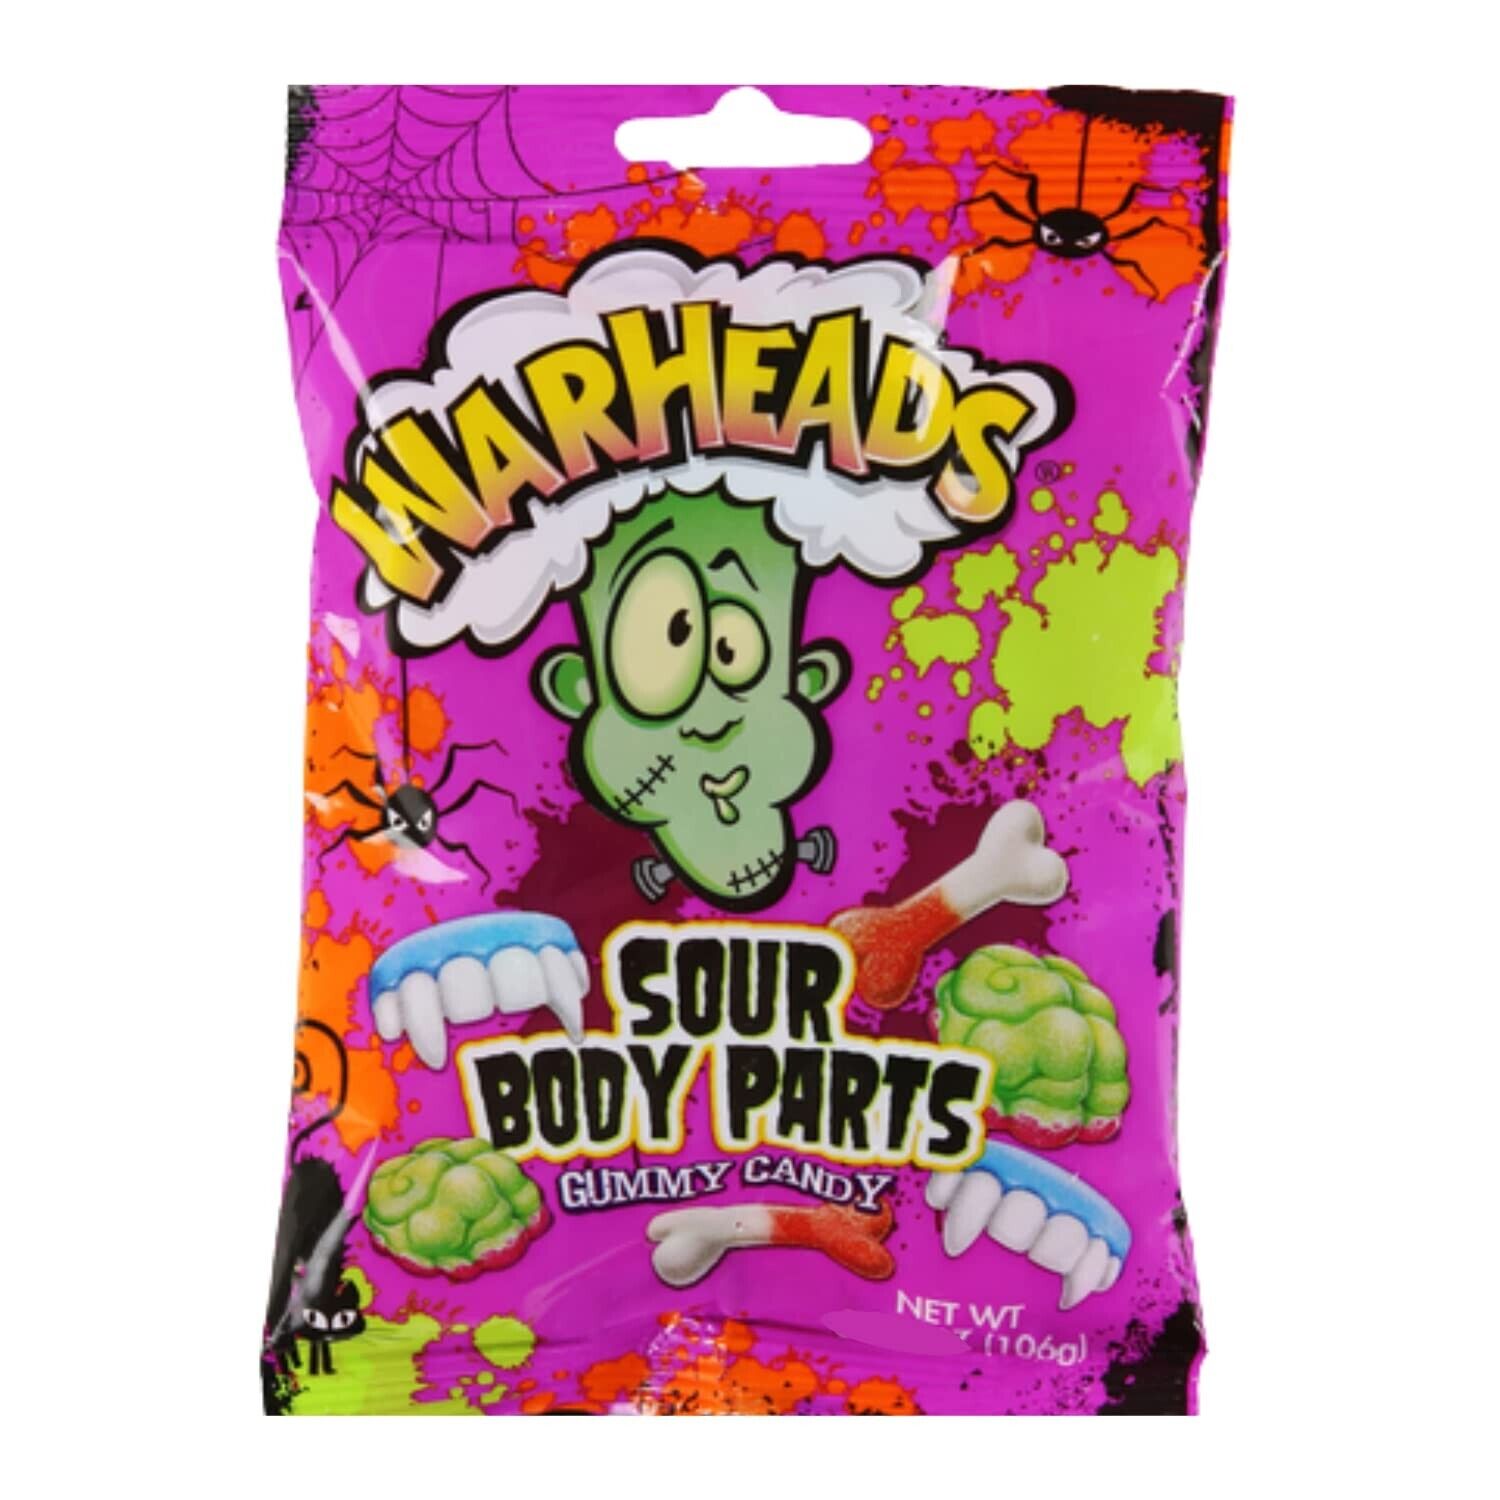 warheads candy challenge